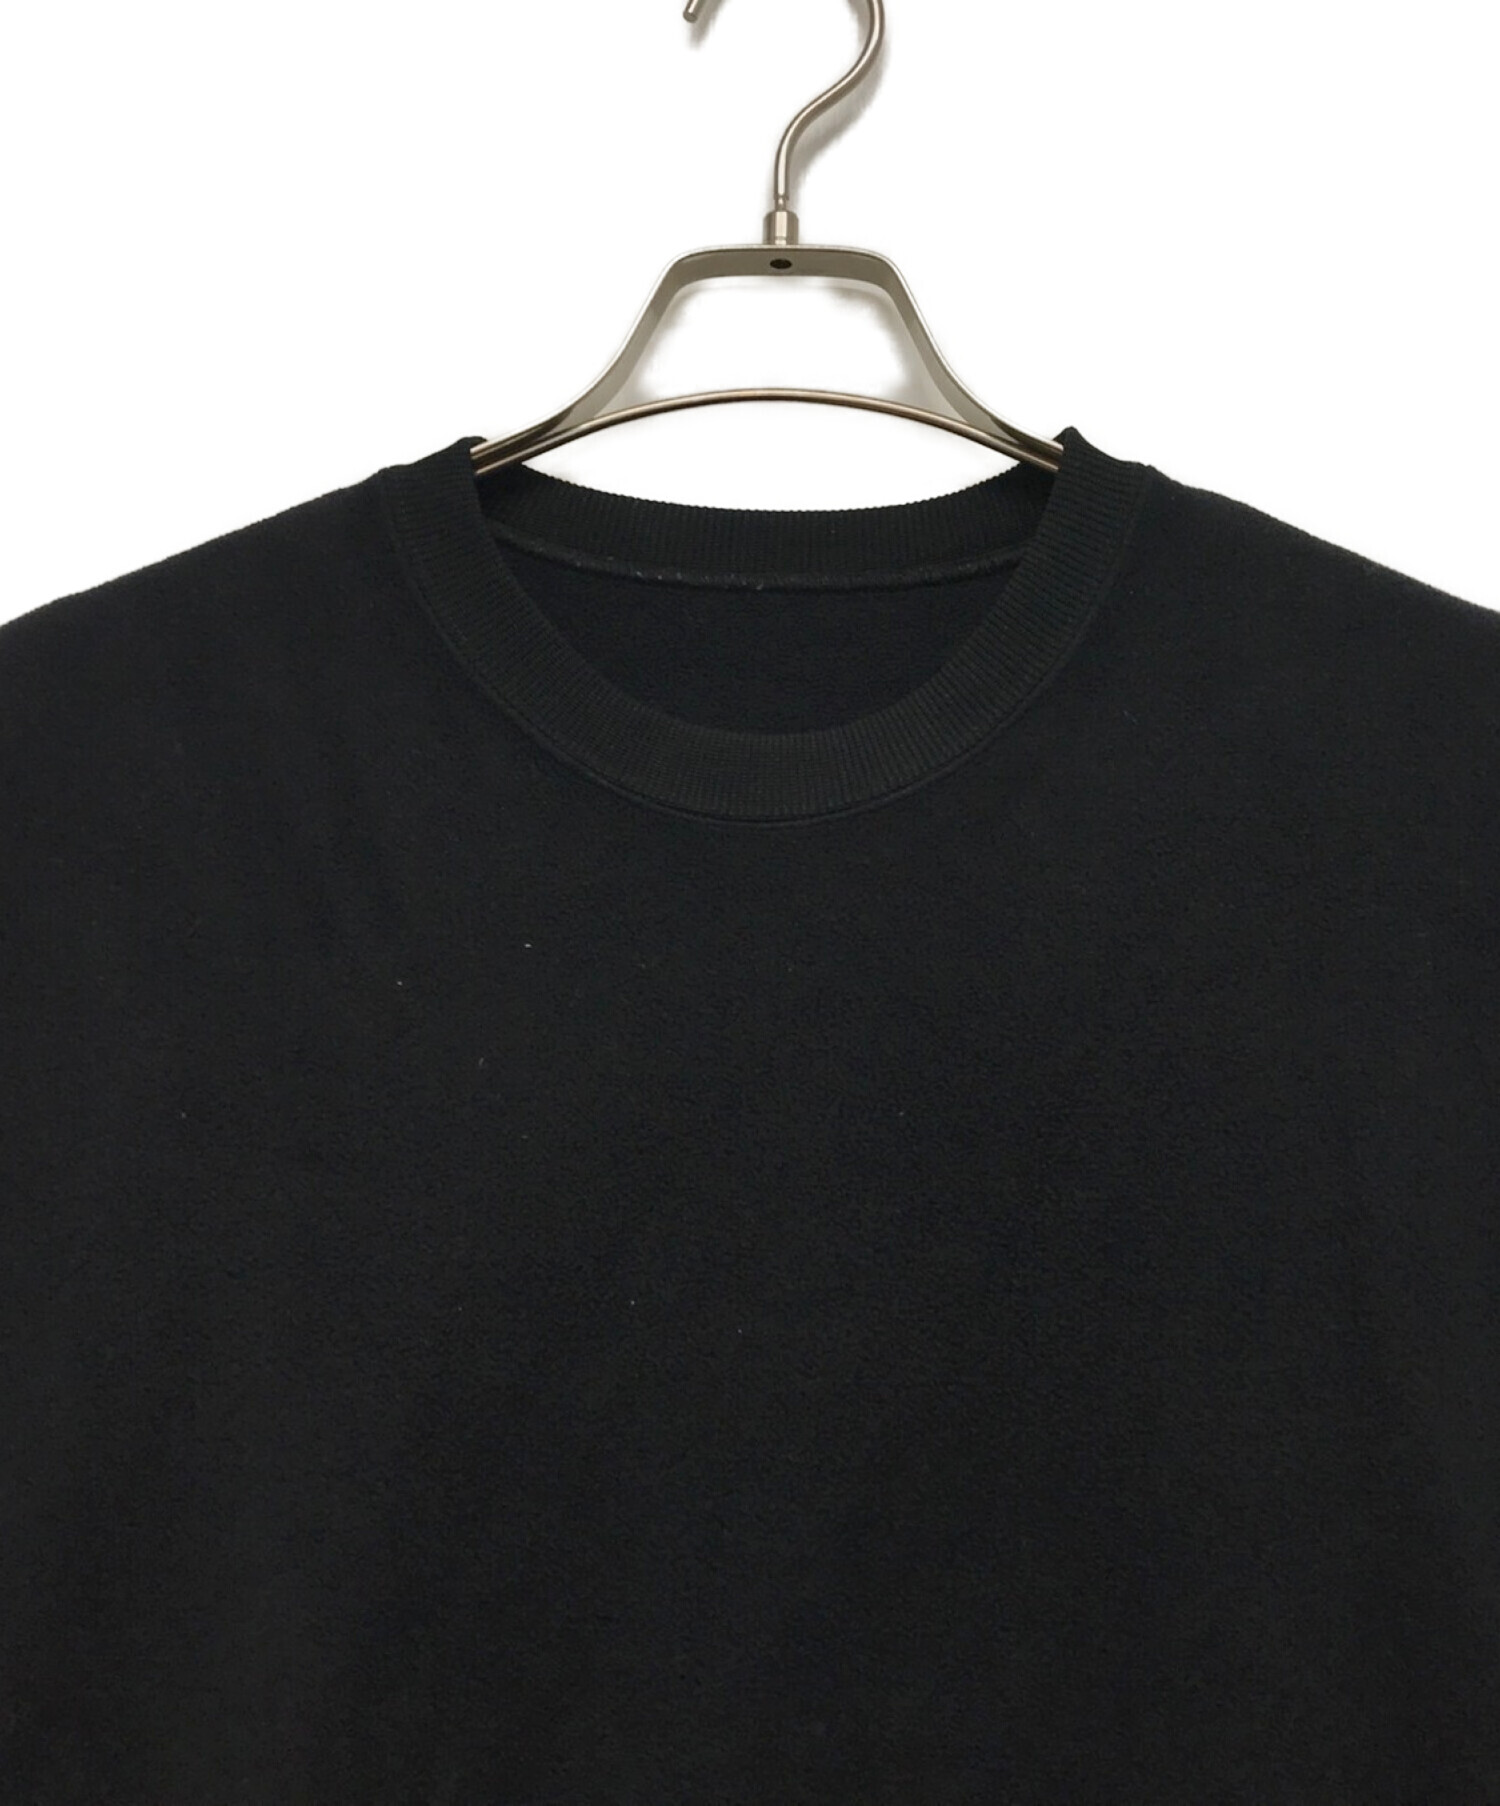 FreshService (フレッシュサービス) フリースプルオーバーシャツ ブラック サイズ:F